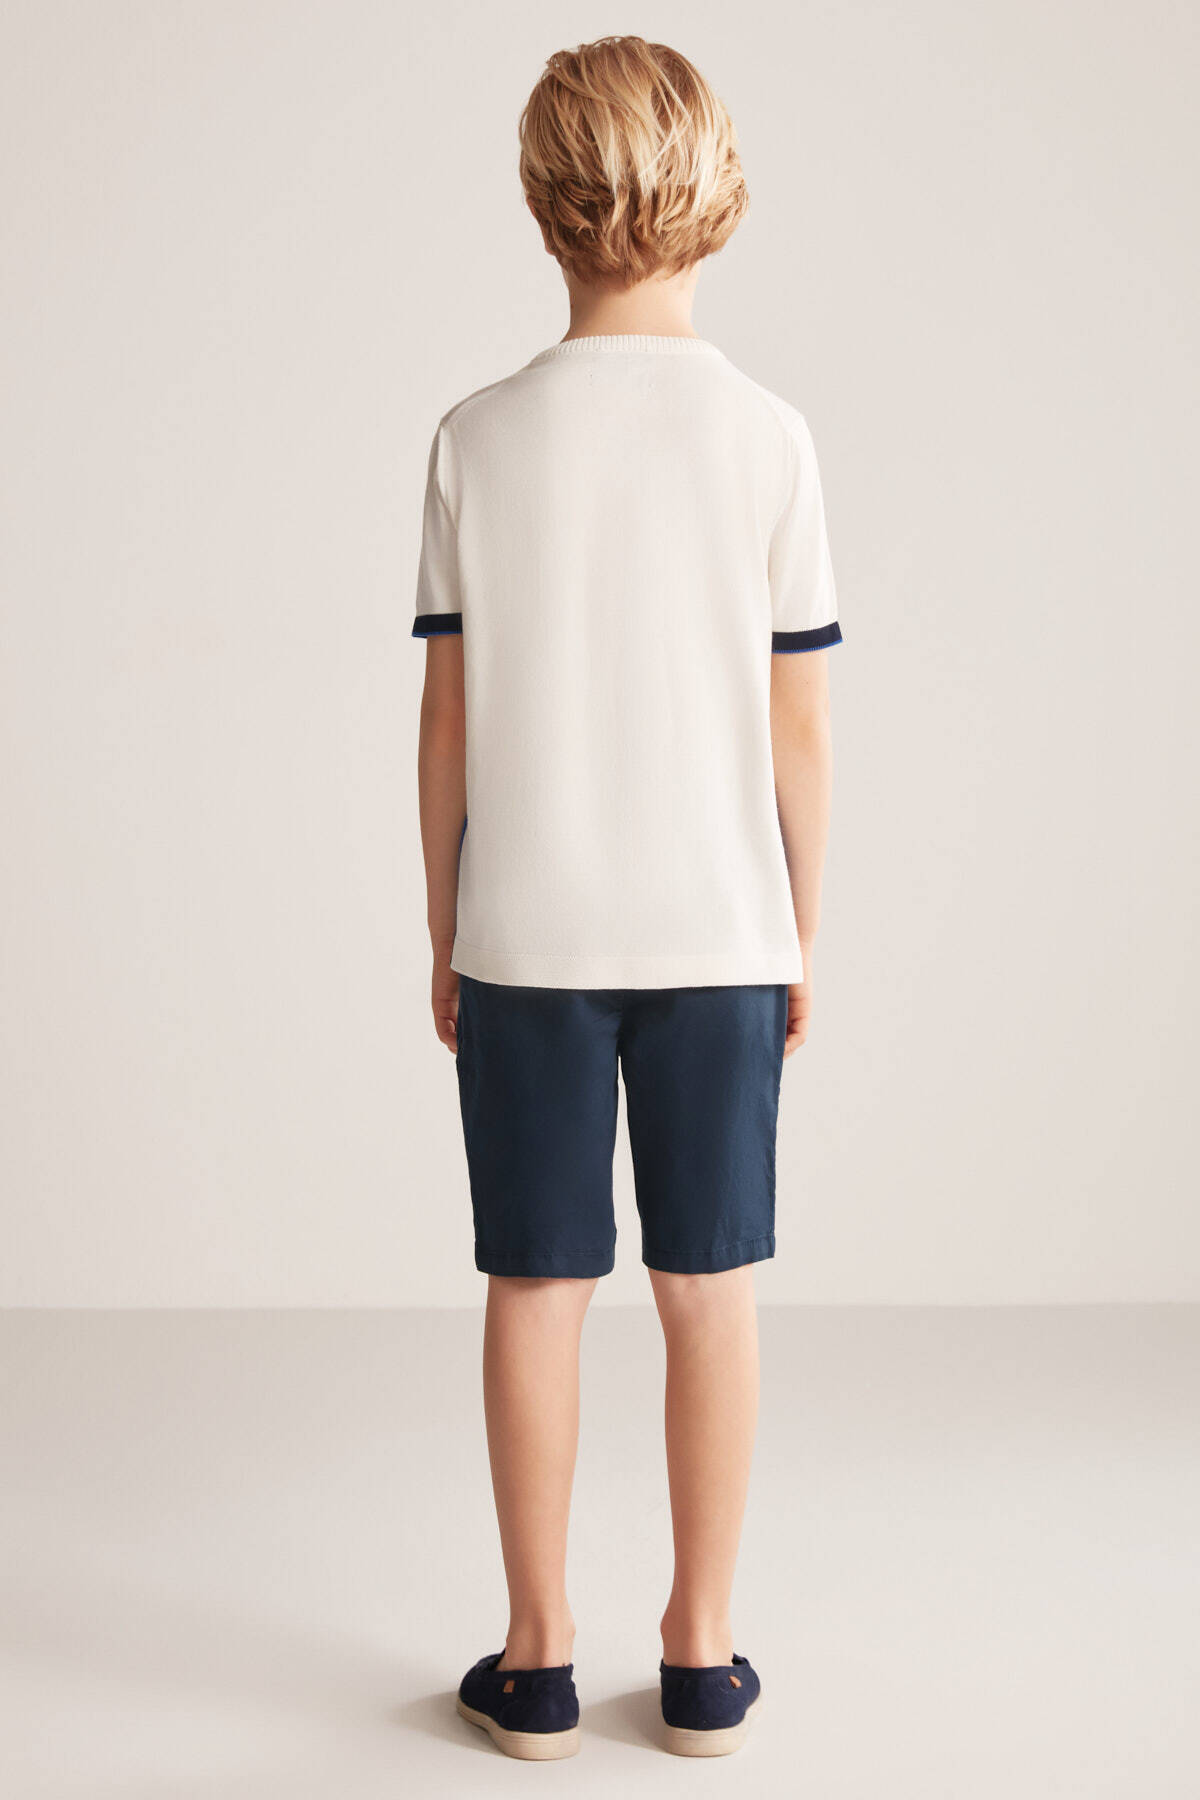 Argyle Desenli Mavi-Beyaz Giza Pamuk Çocuk Triko T-Shirt